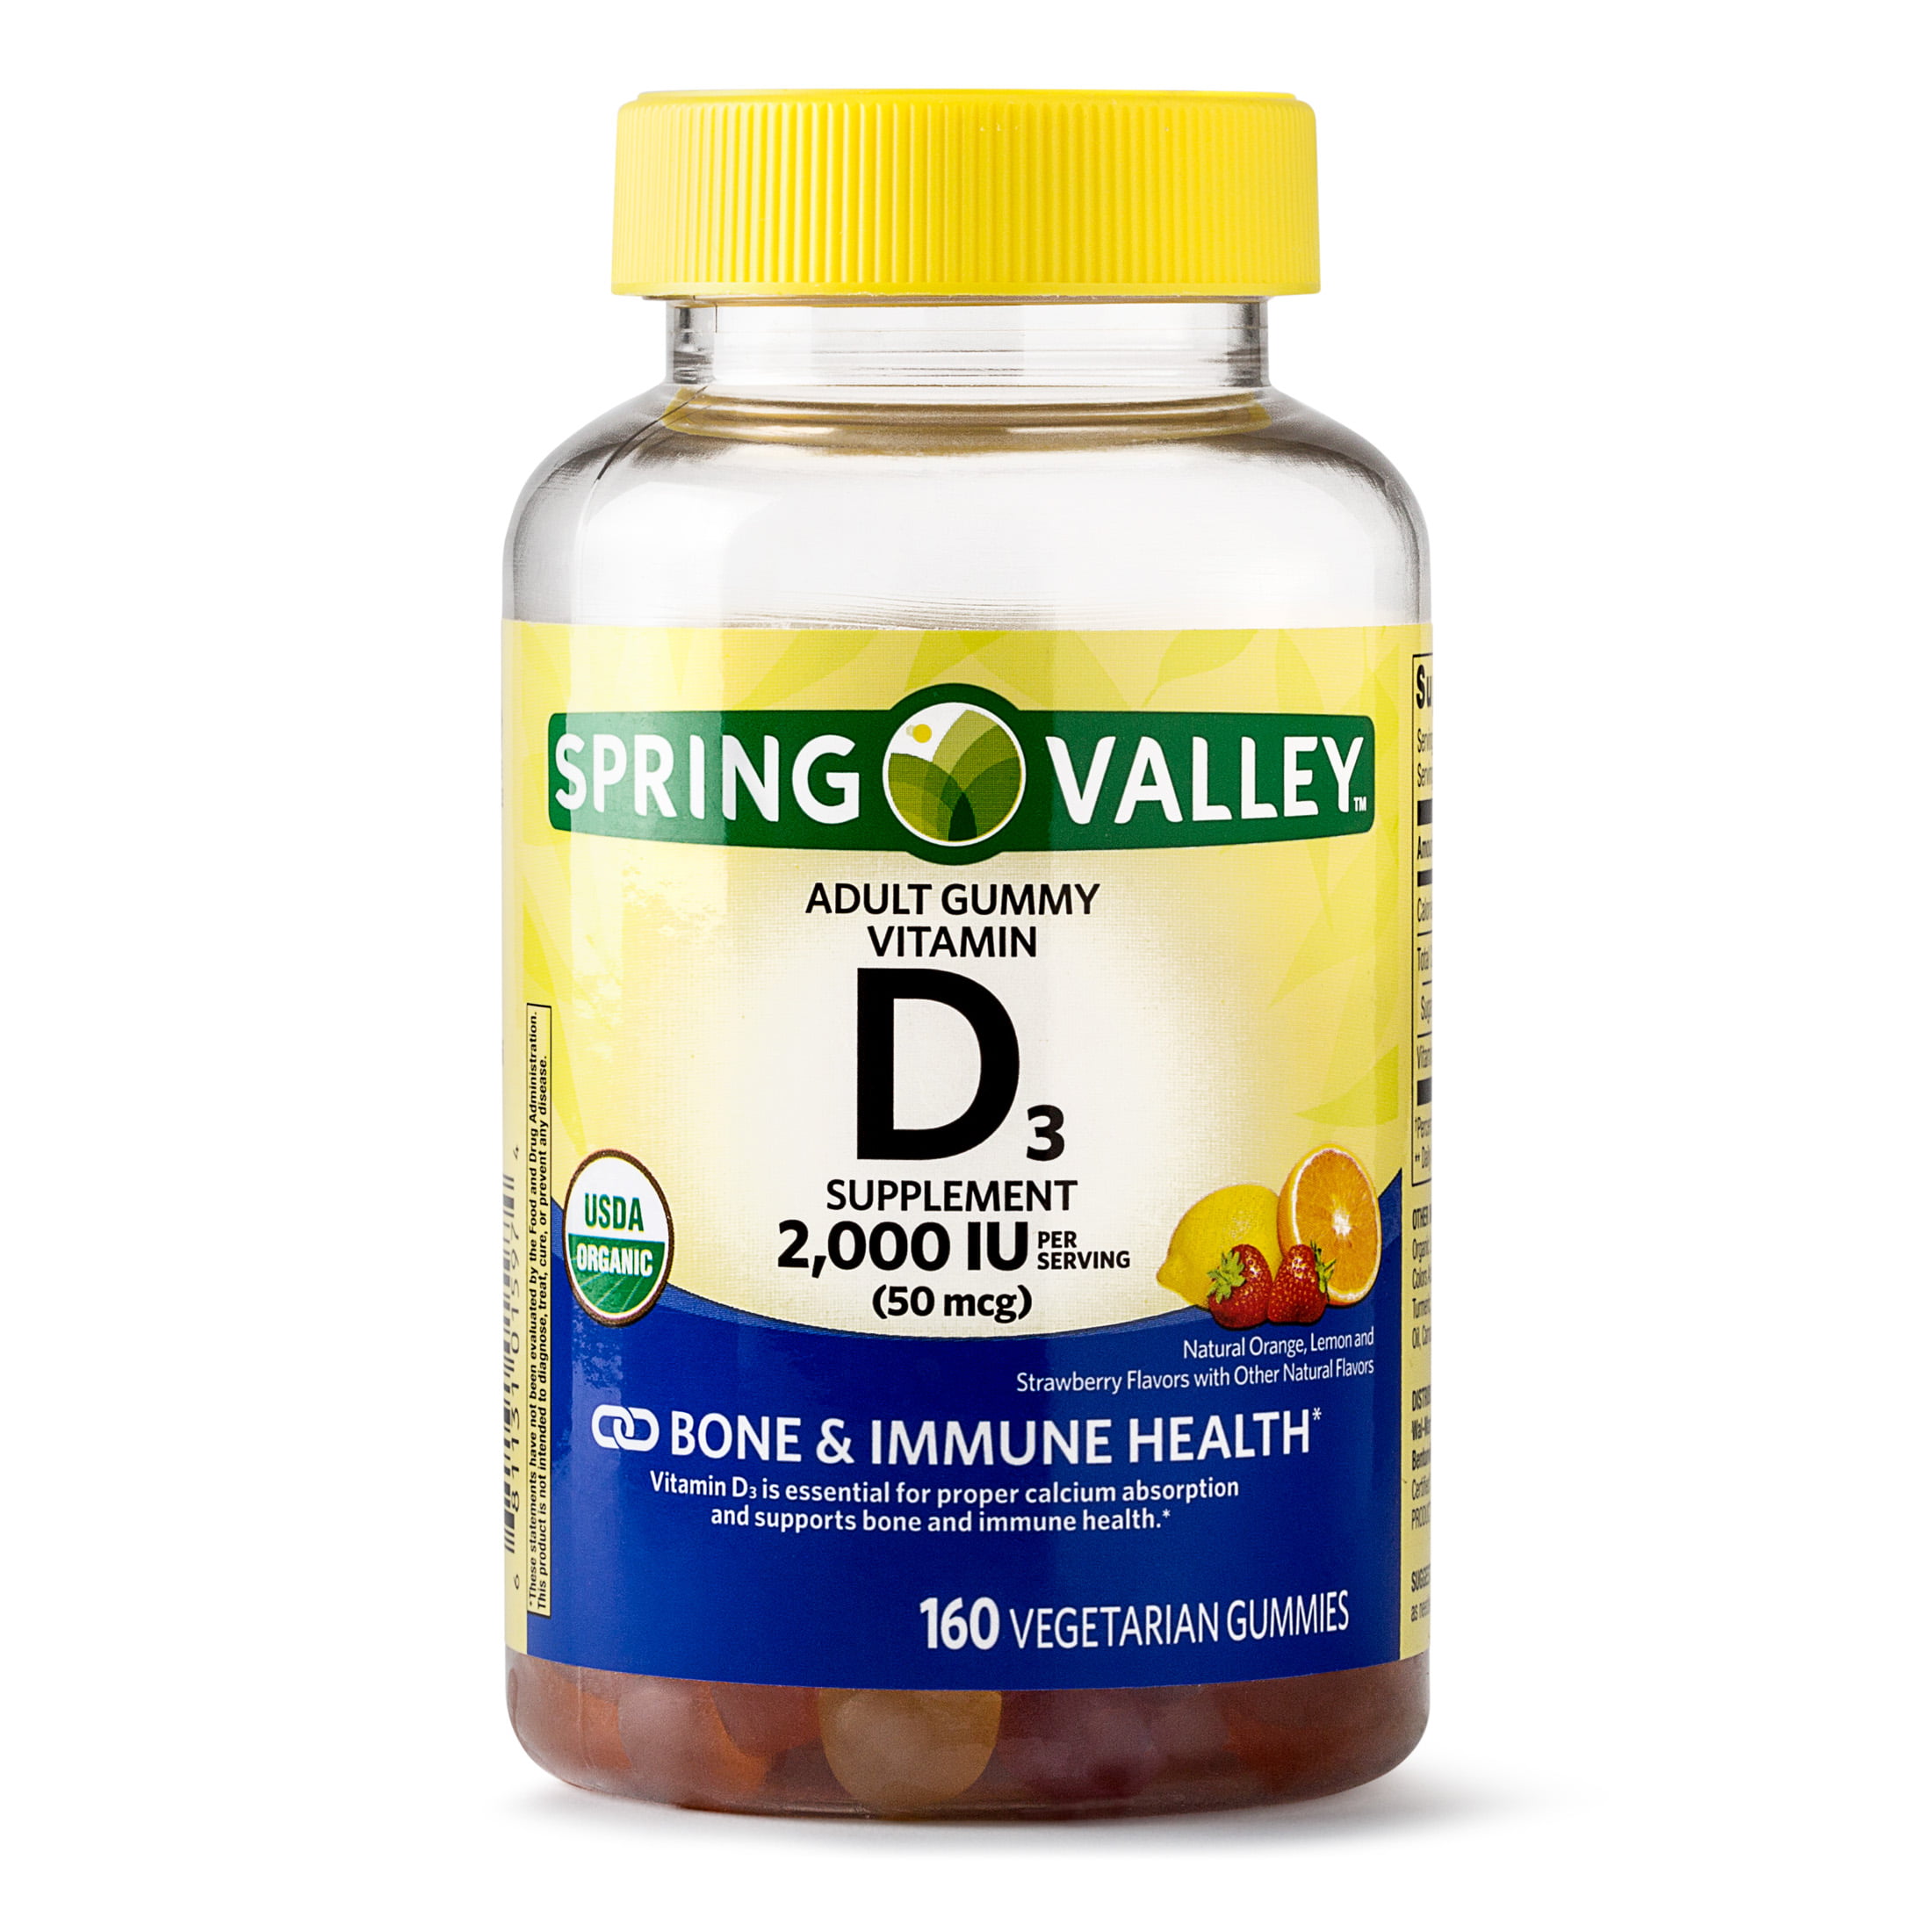 Spring Valley Vitamin D3 Gummy, 2000 IU, 50 mcg, 160 Ct - Walmart.com